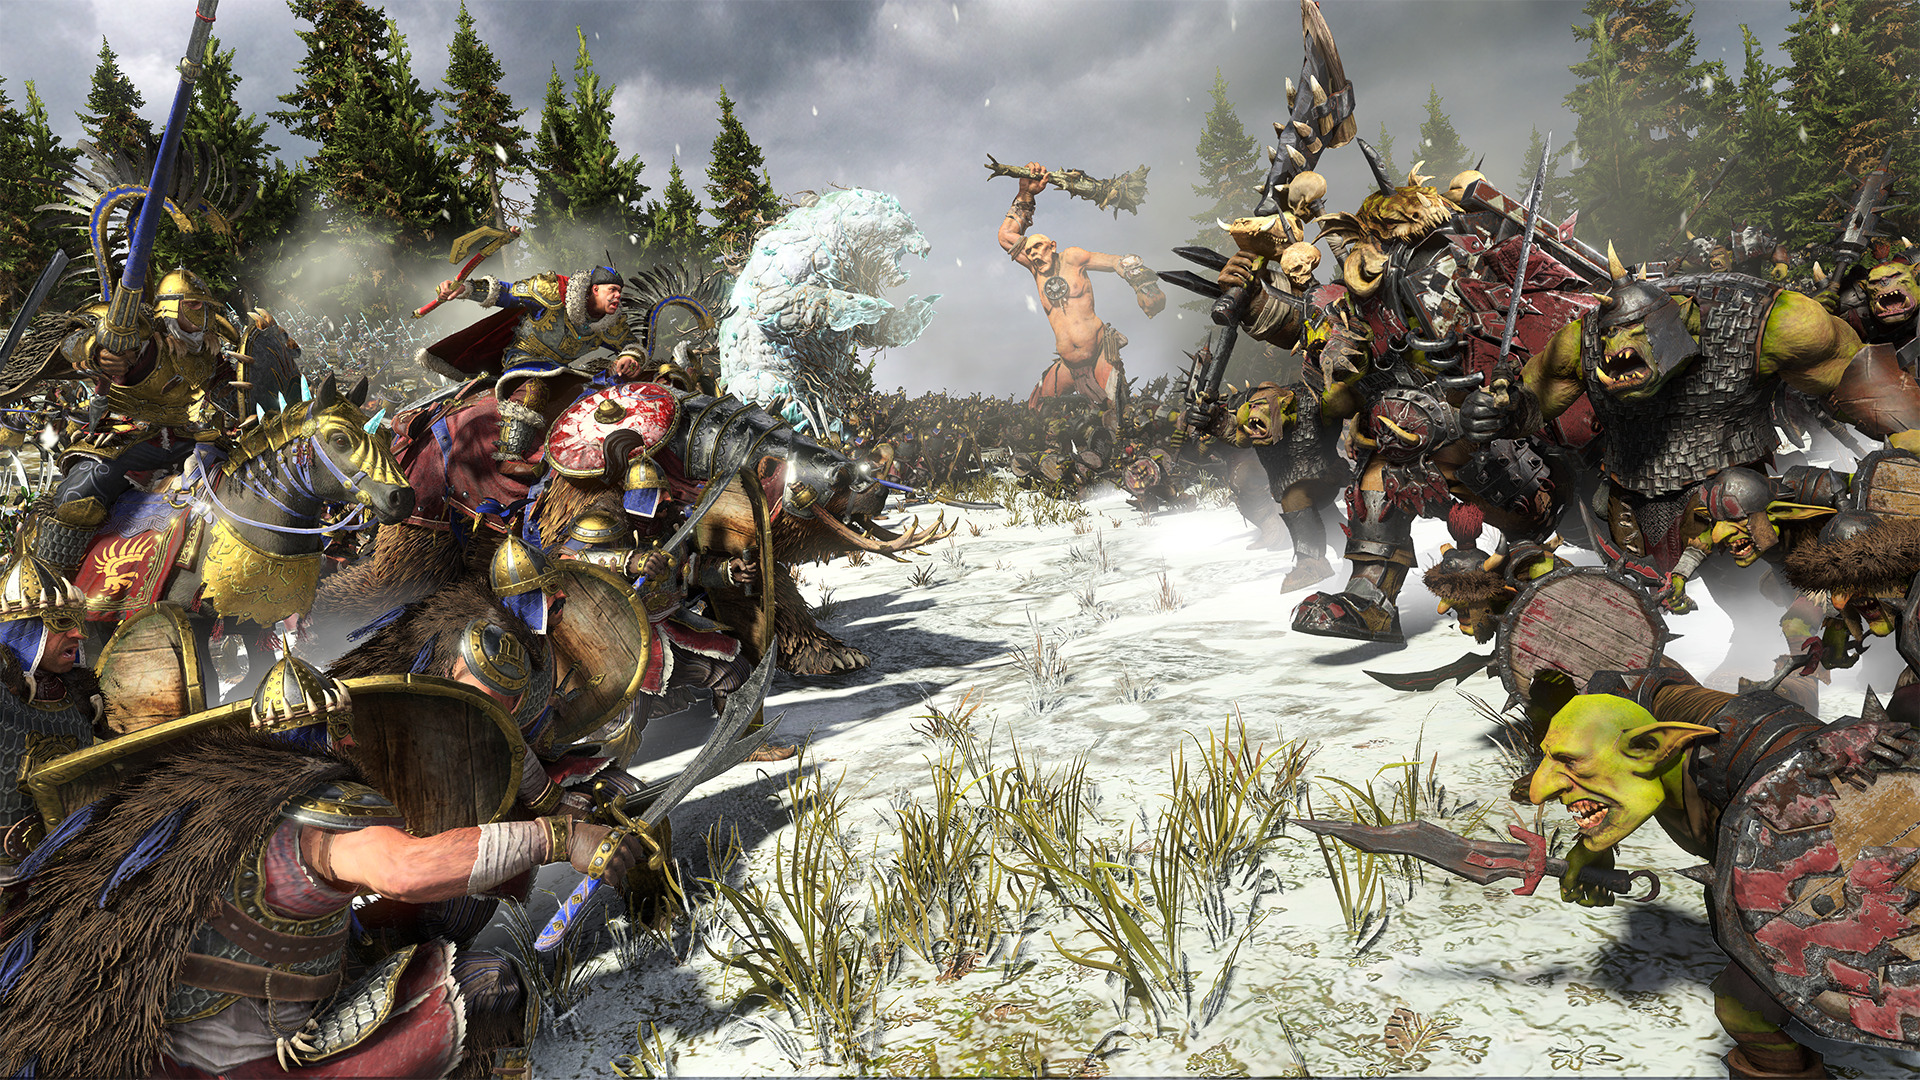 Warhammer 3 Immortal Empires: two armies clash on a snowy field